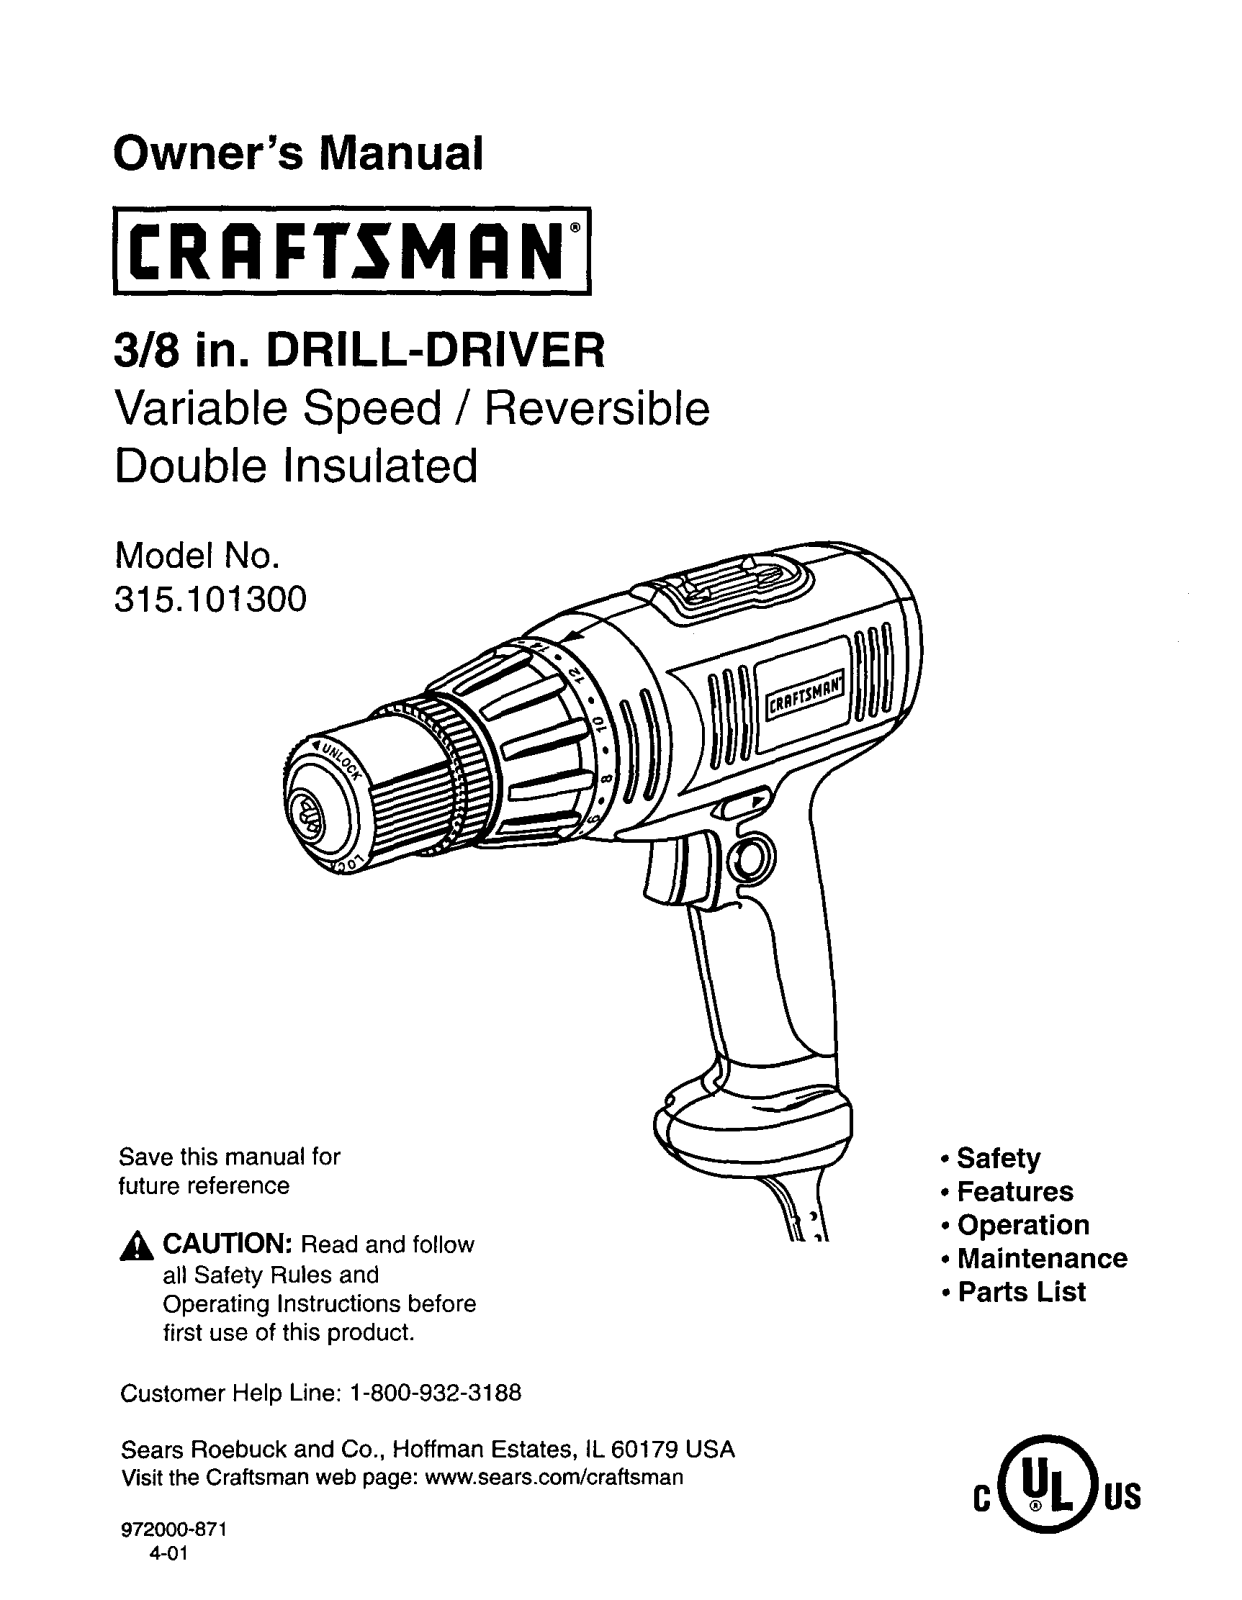 Craftsman 315101300 Owner’s Manual